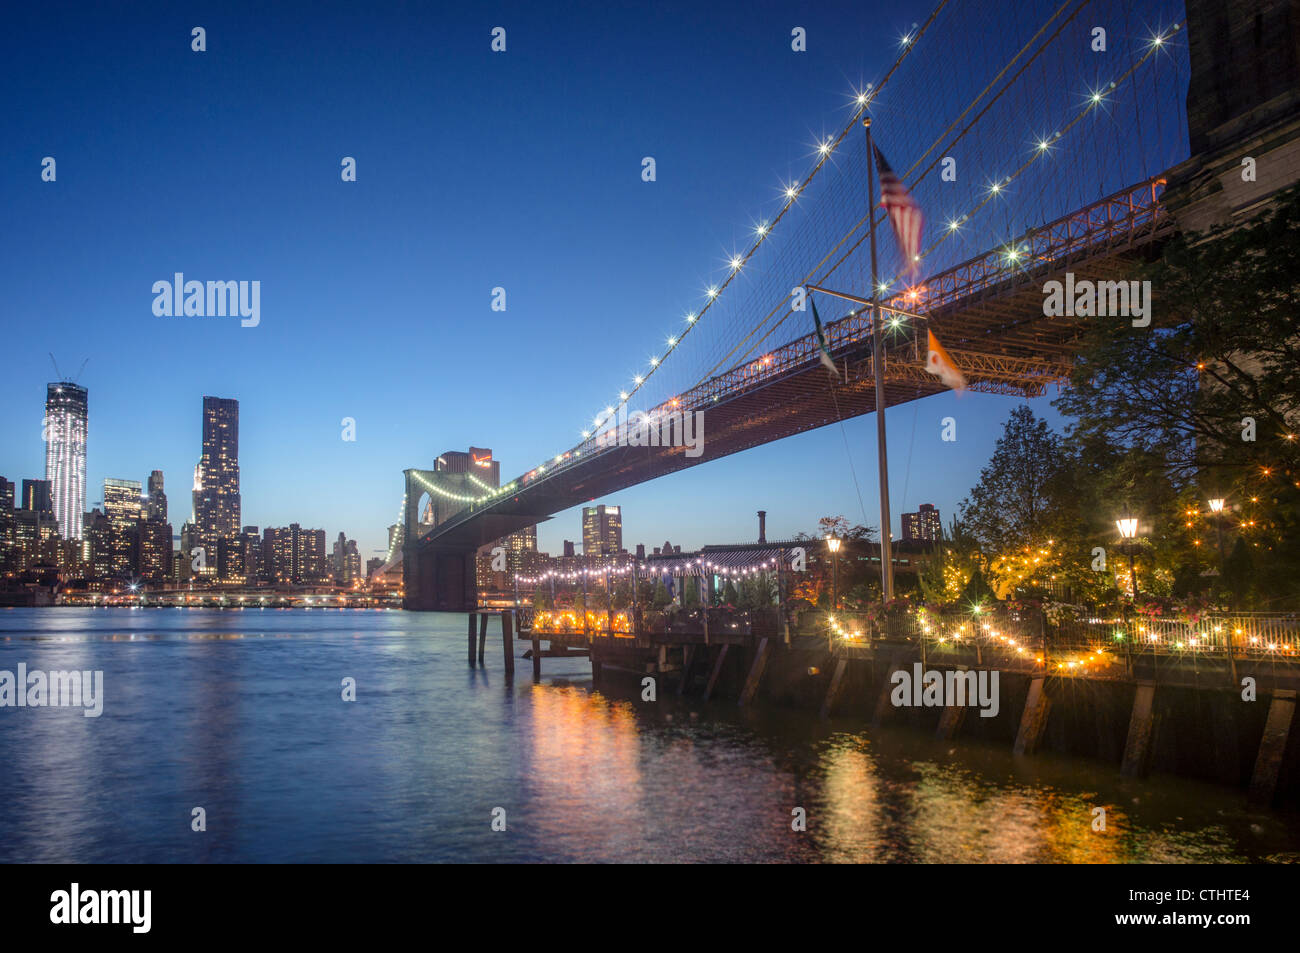 River Cafe at Brooklyn Bridge, New York city, USA Stock Photo